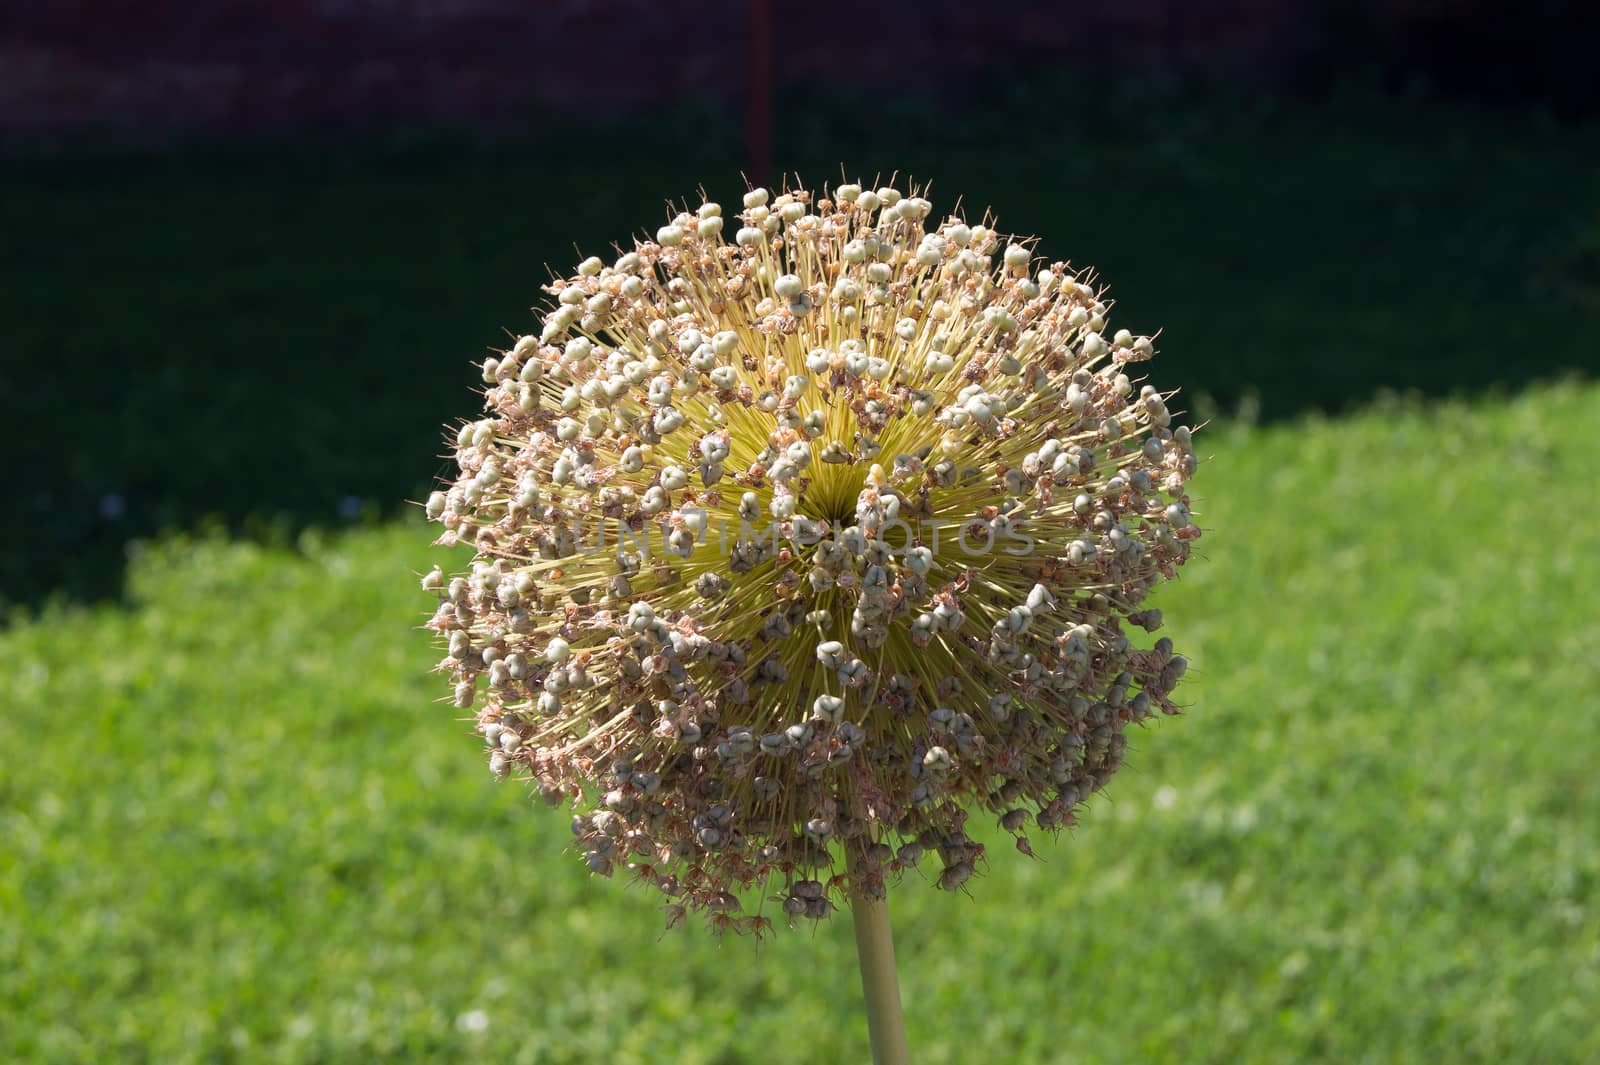 Giant Ornamental onion (Allium giganteum) by dadalia